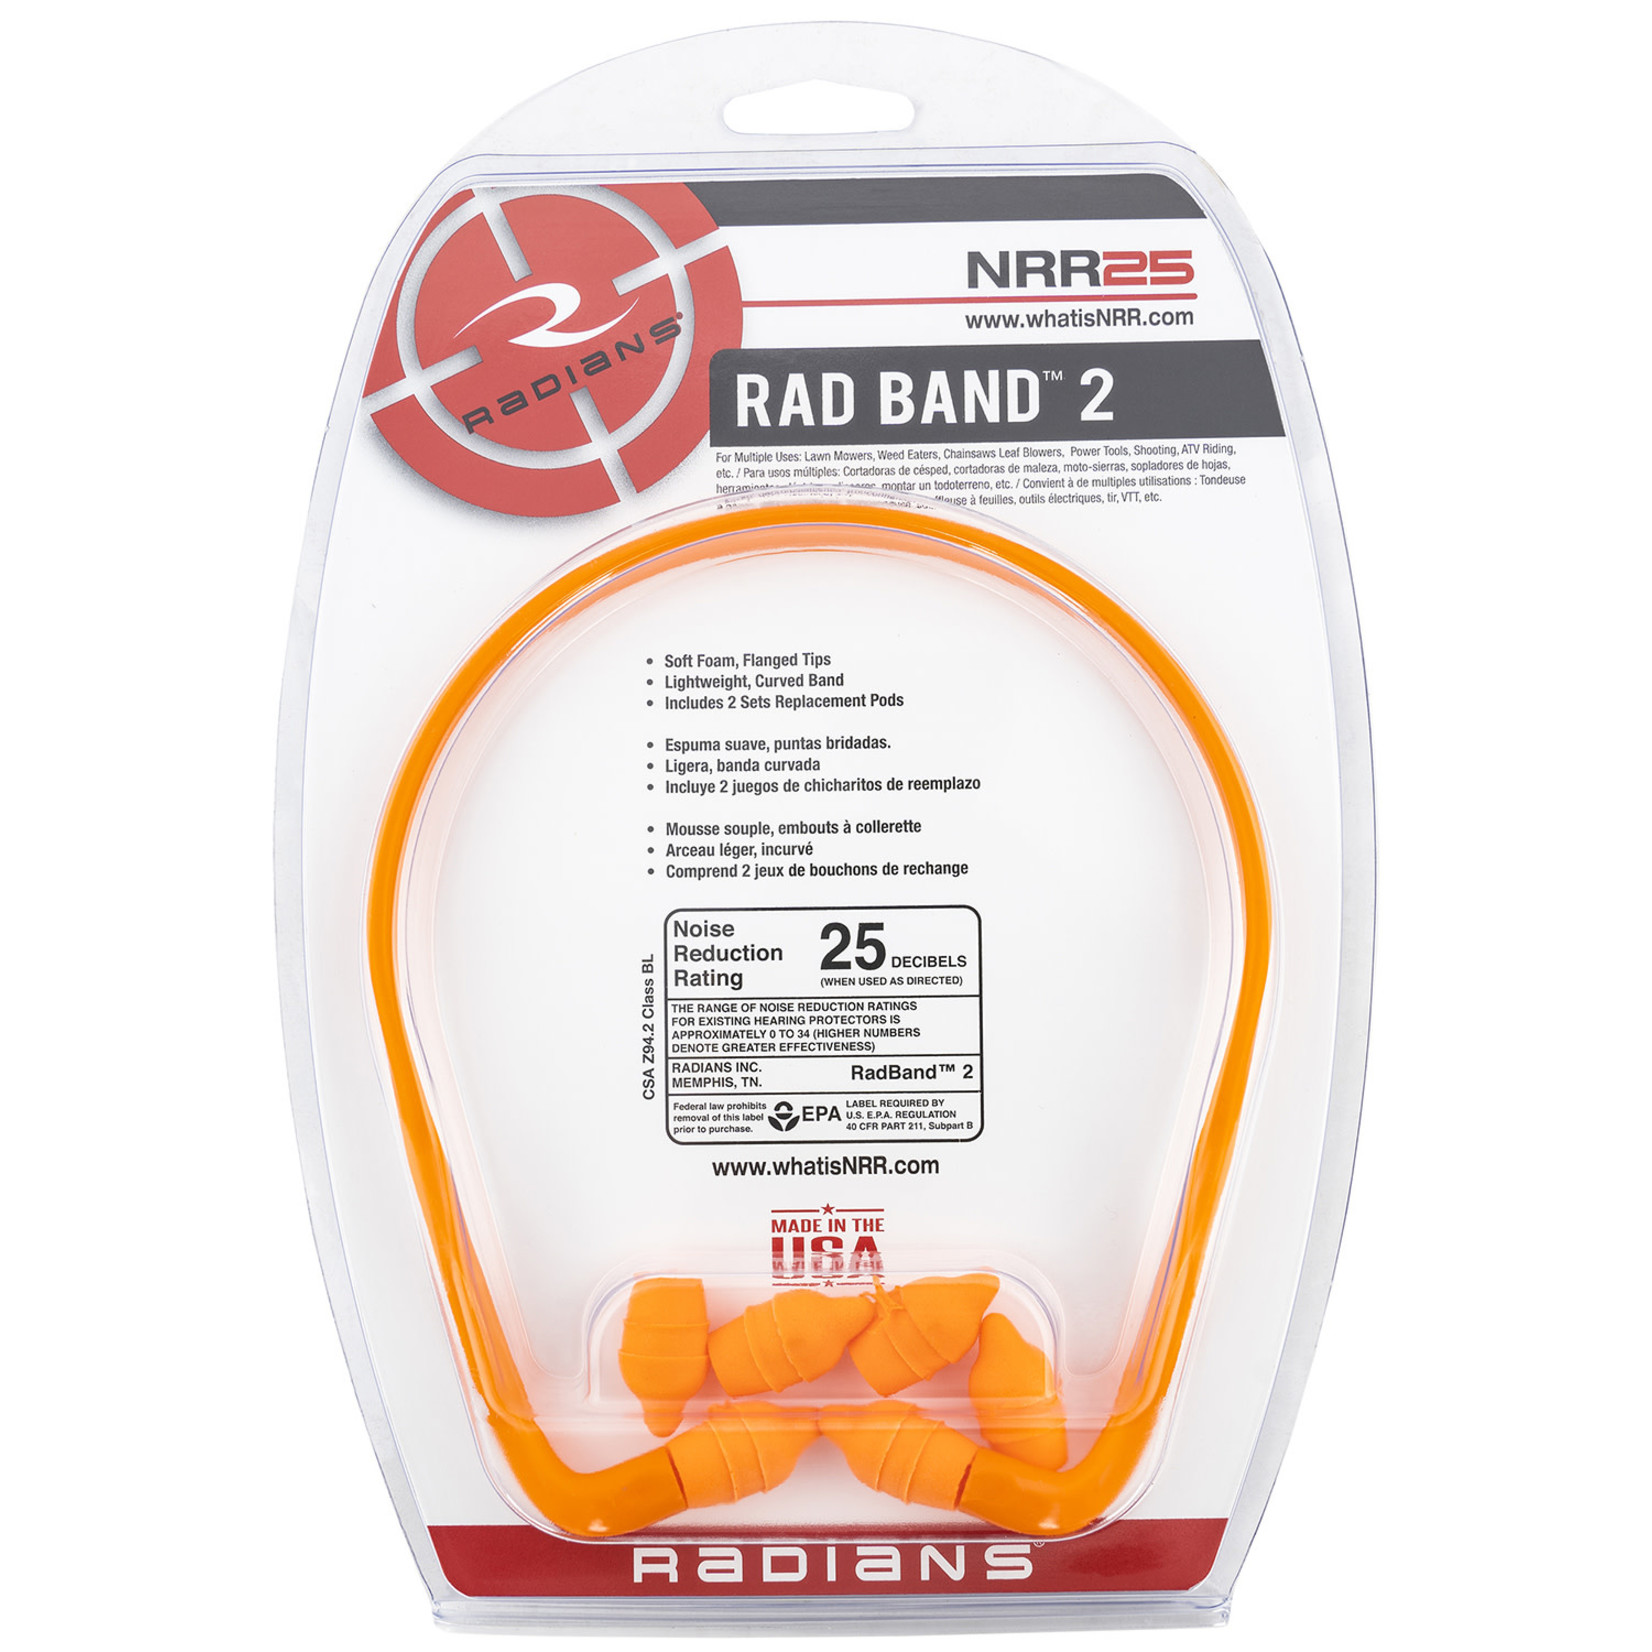 Radians Rad Band 2 Ear Plugs